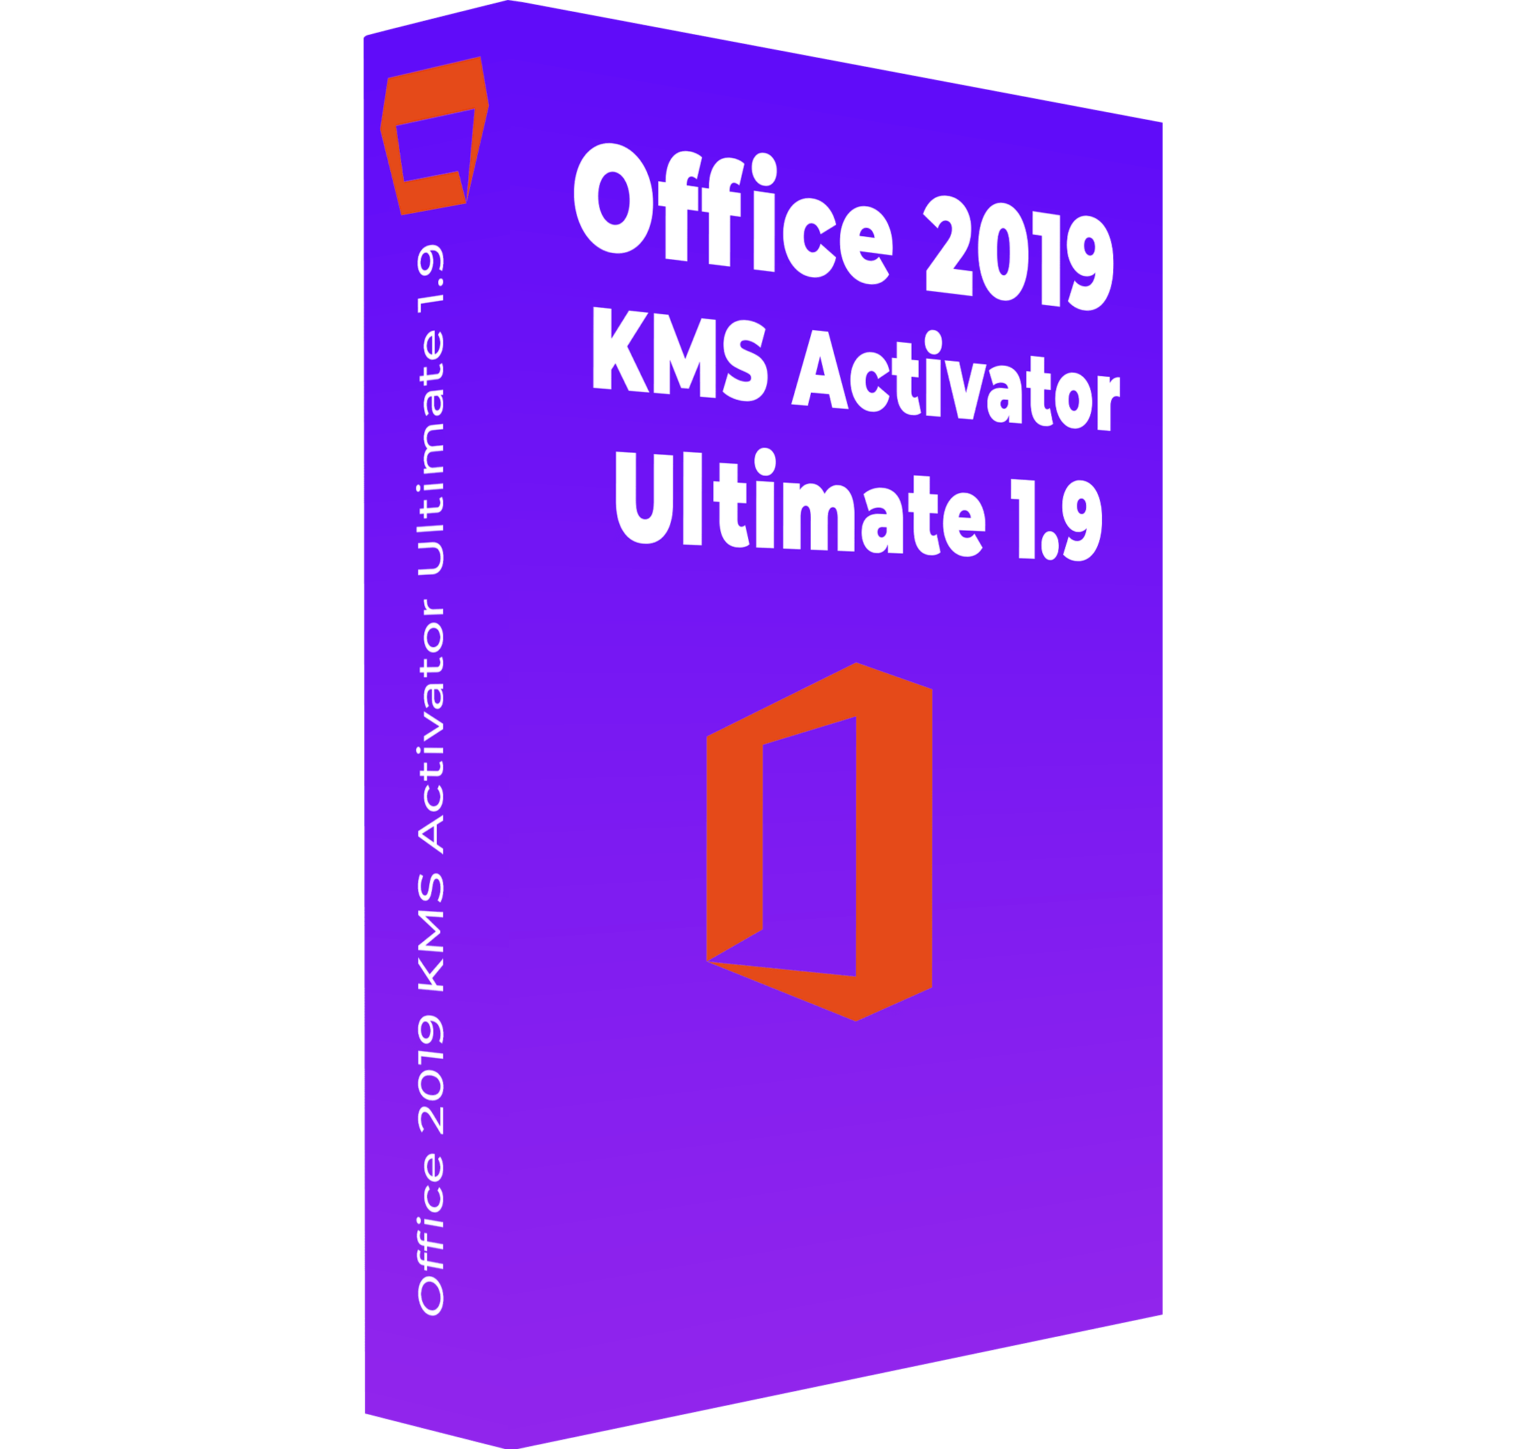 Office 2019 Kms Activator Ultimate 19 Soft Warez Best 8373